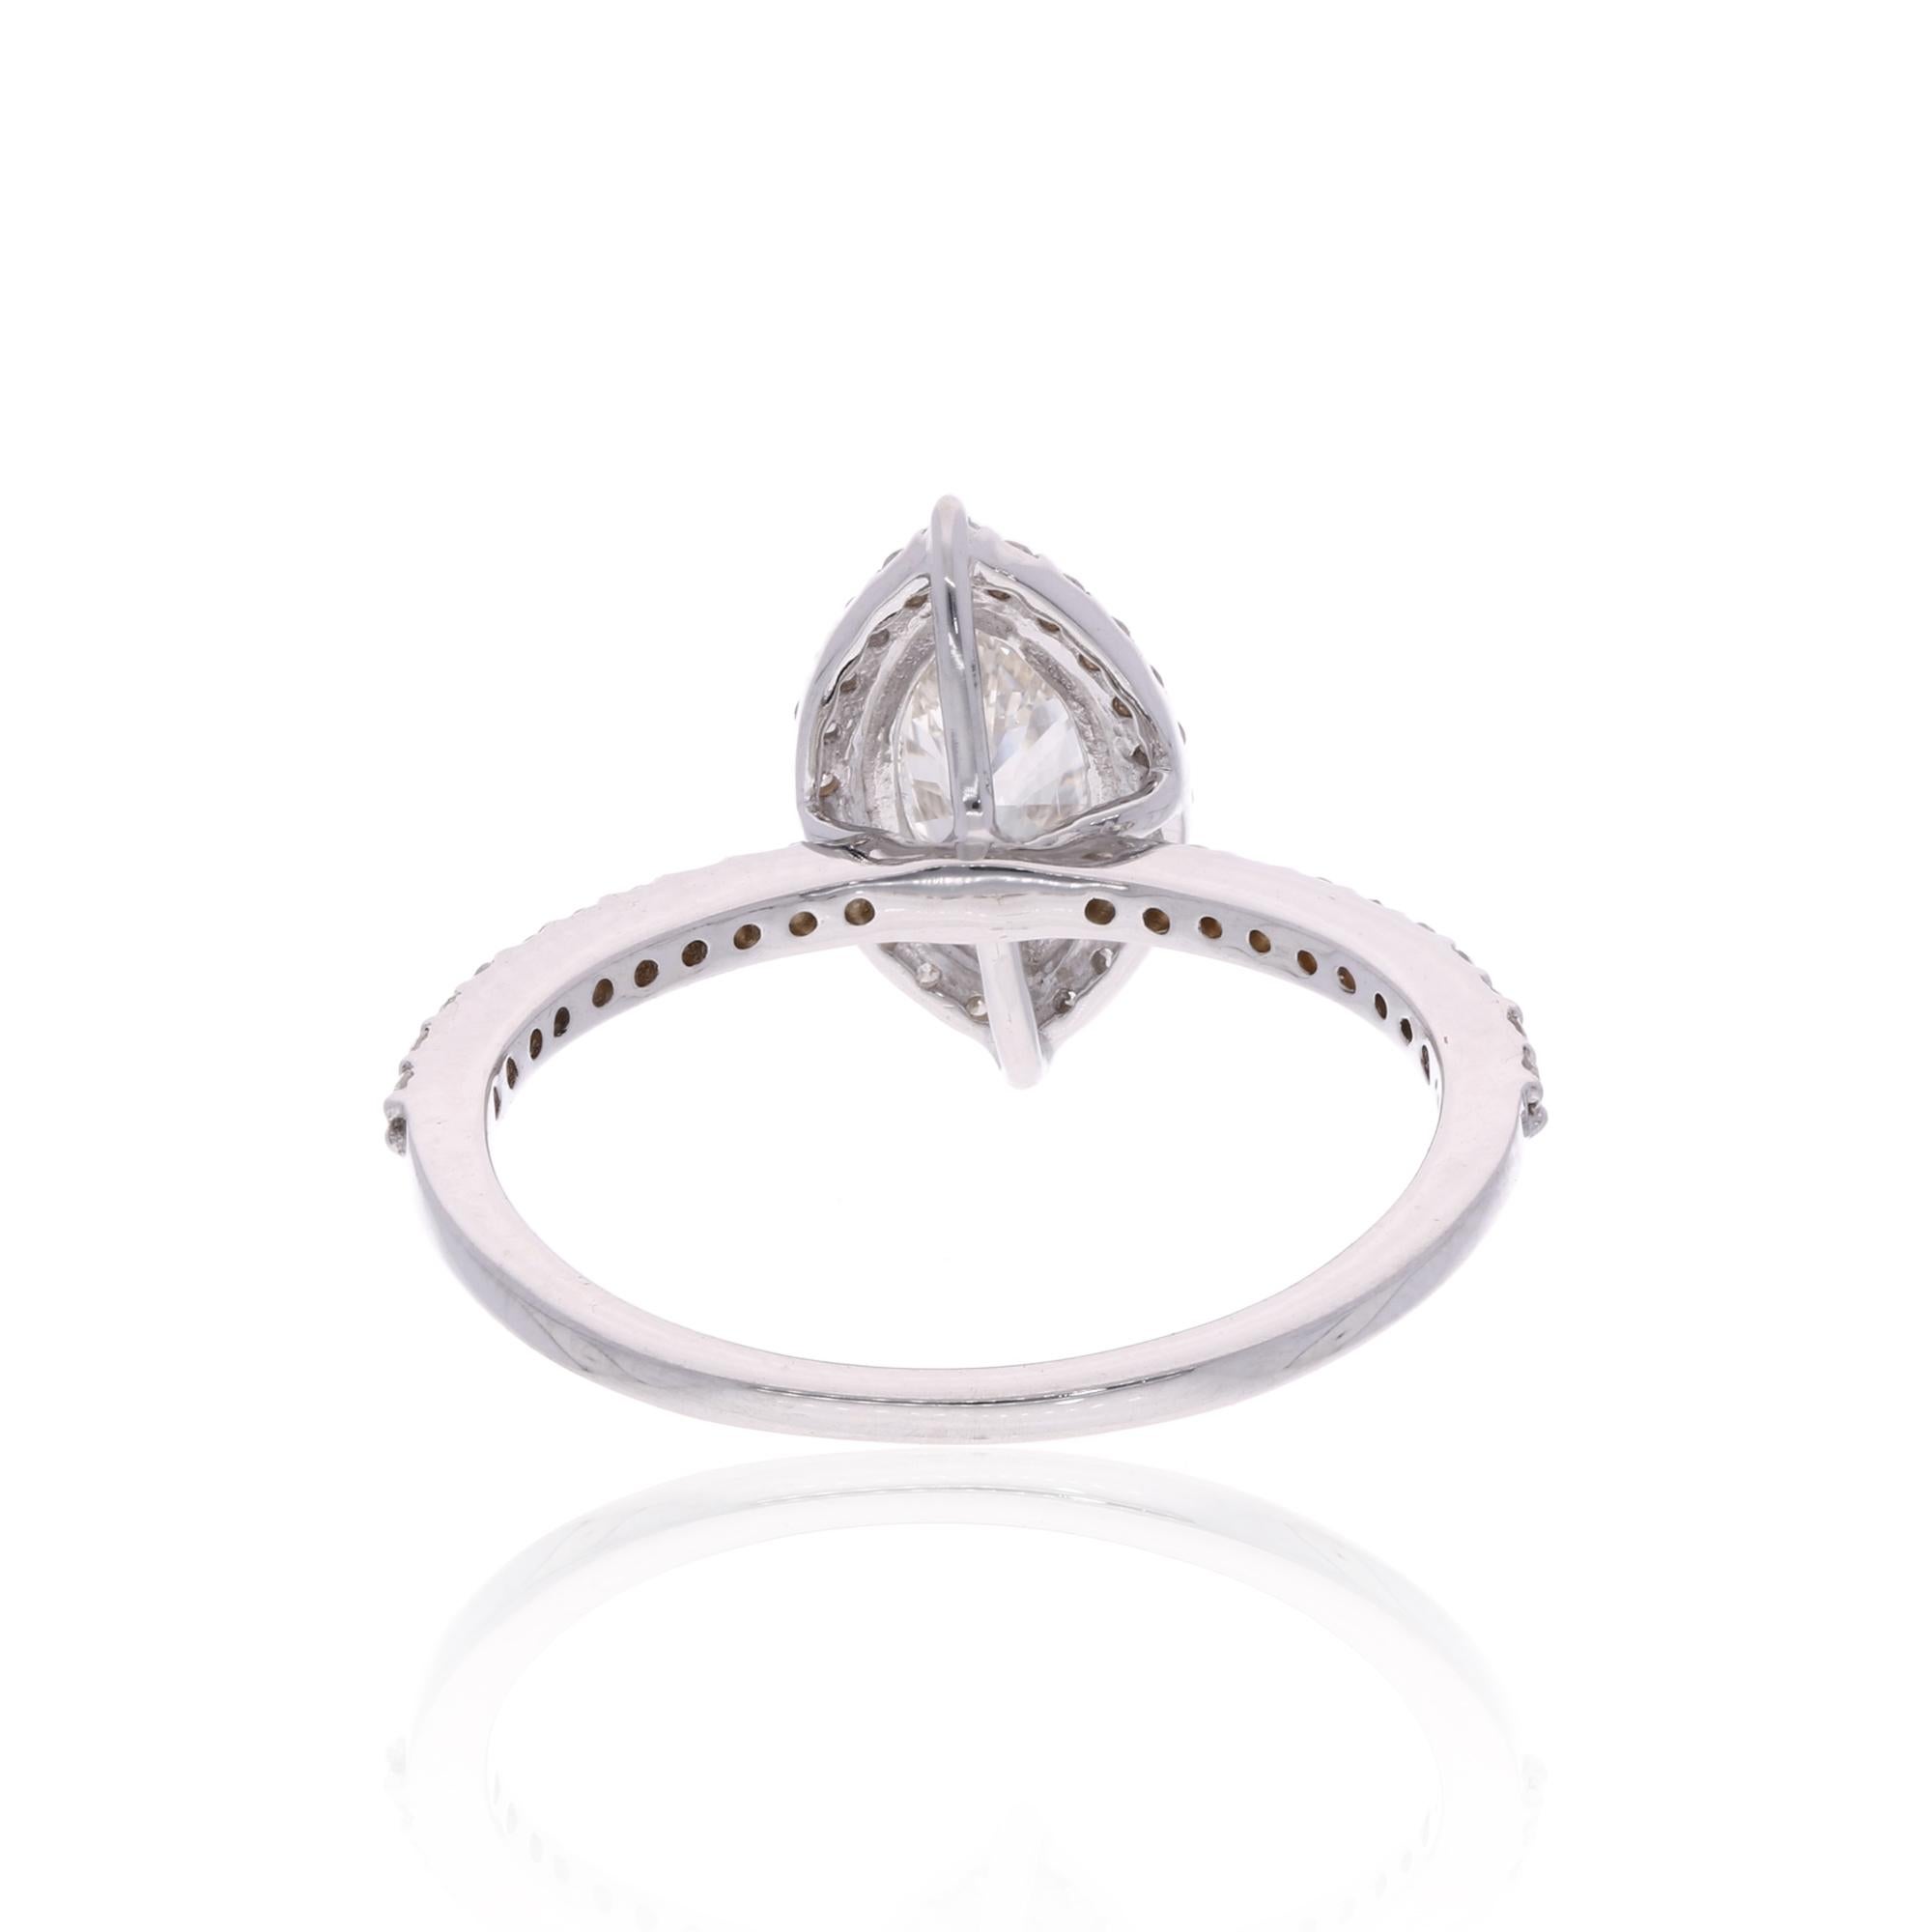 0.8 carat marquise diamond ring